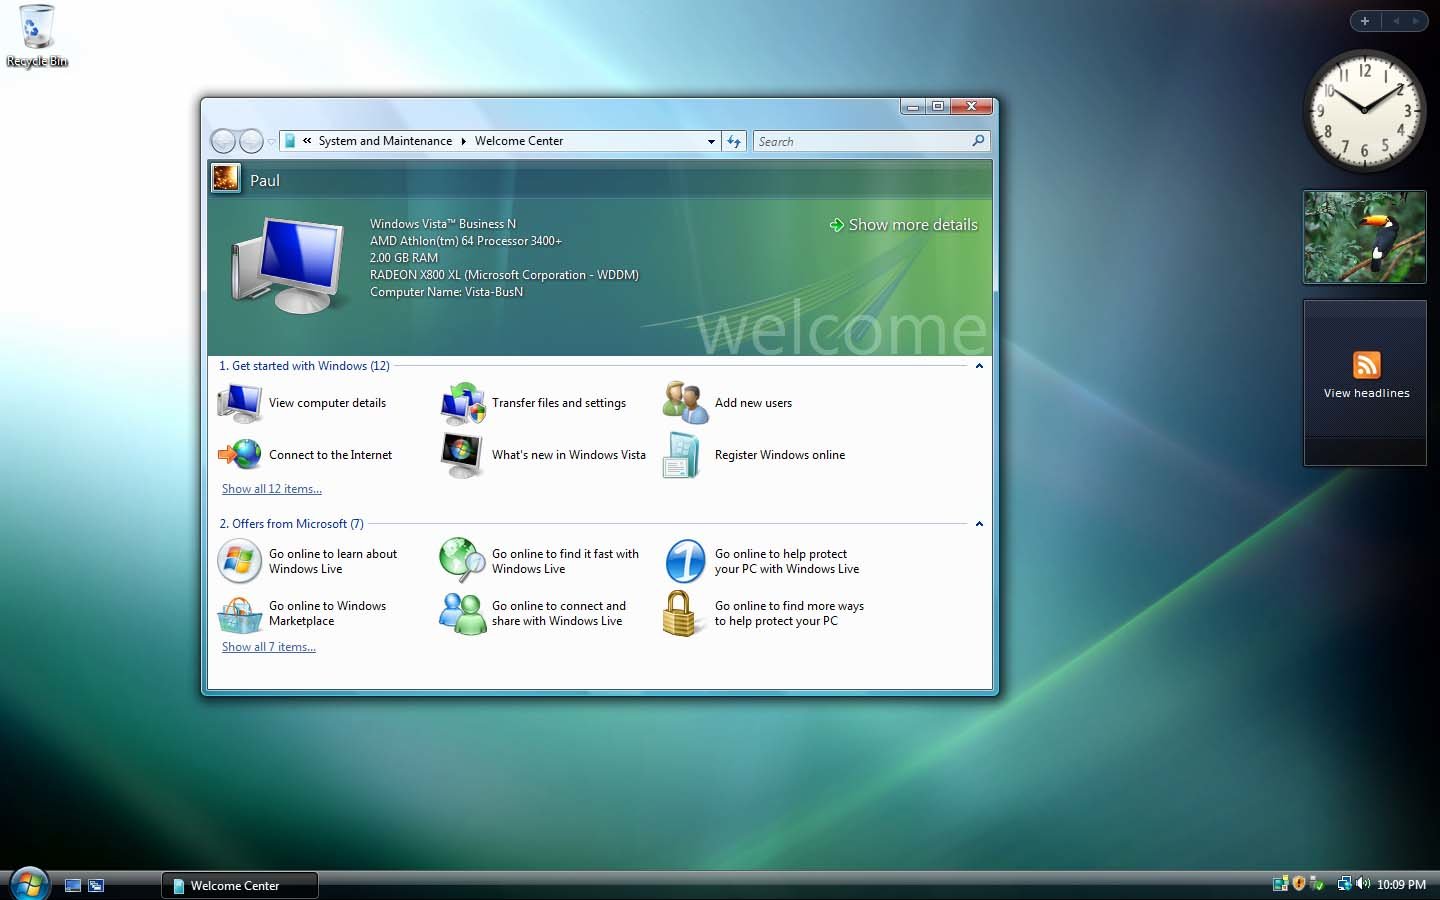 Windows Vista Business N